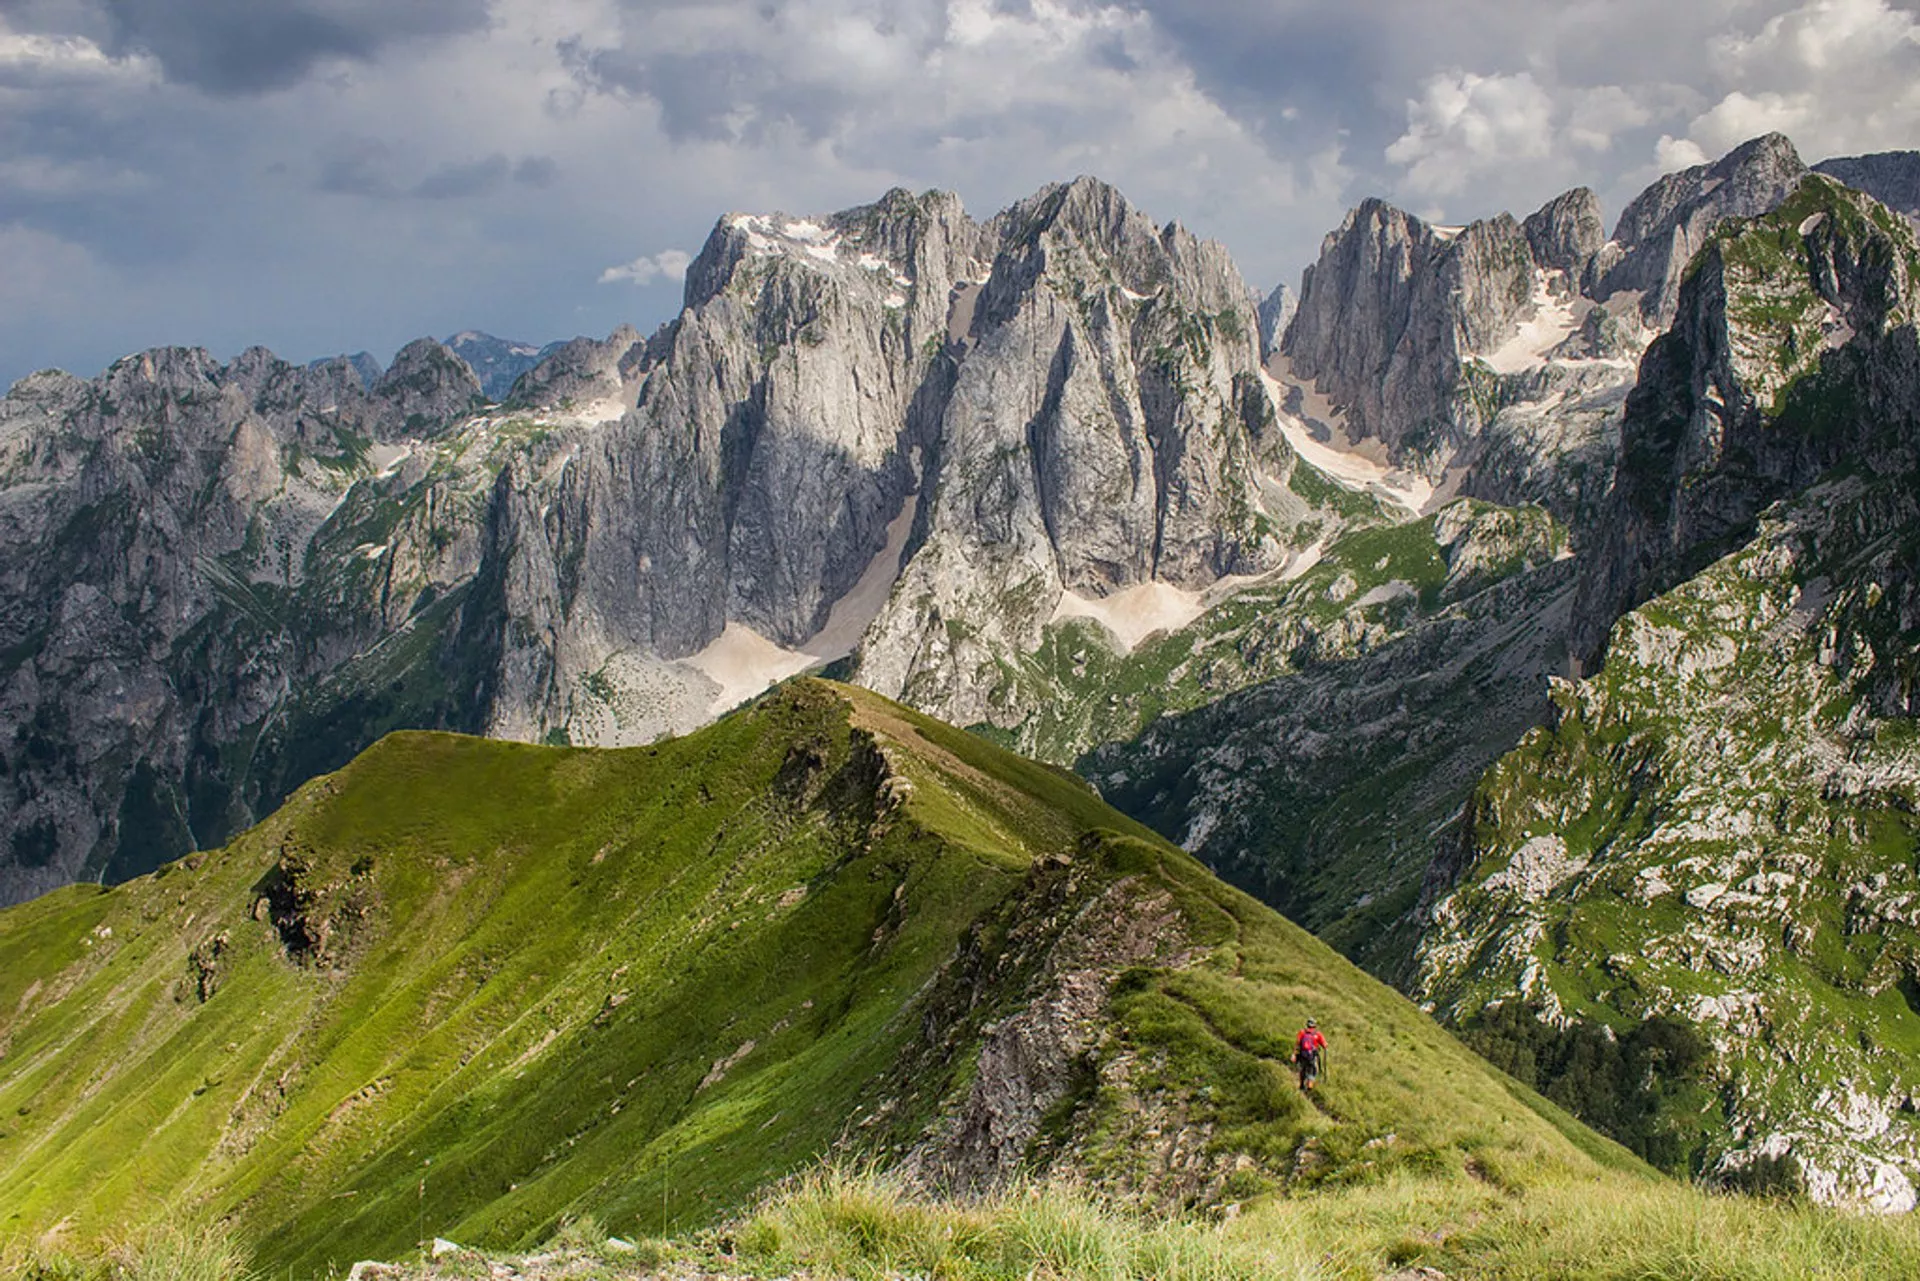 Prokletije National Park in Montenegro, Europe | Trekking & Hiking - Rated 0.9